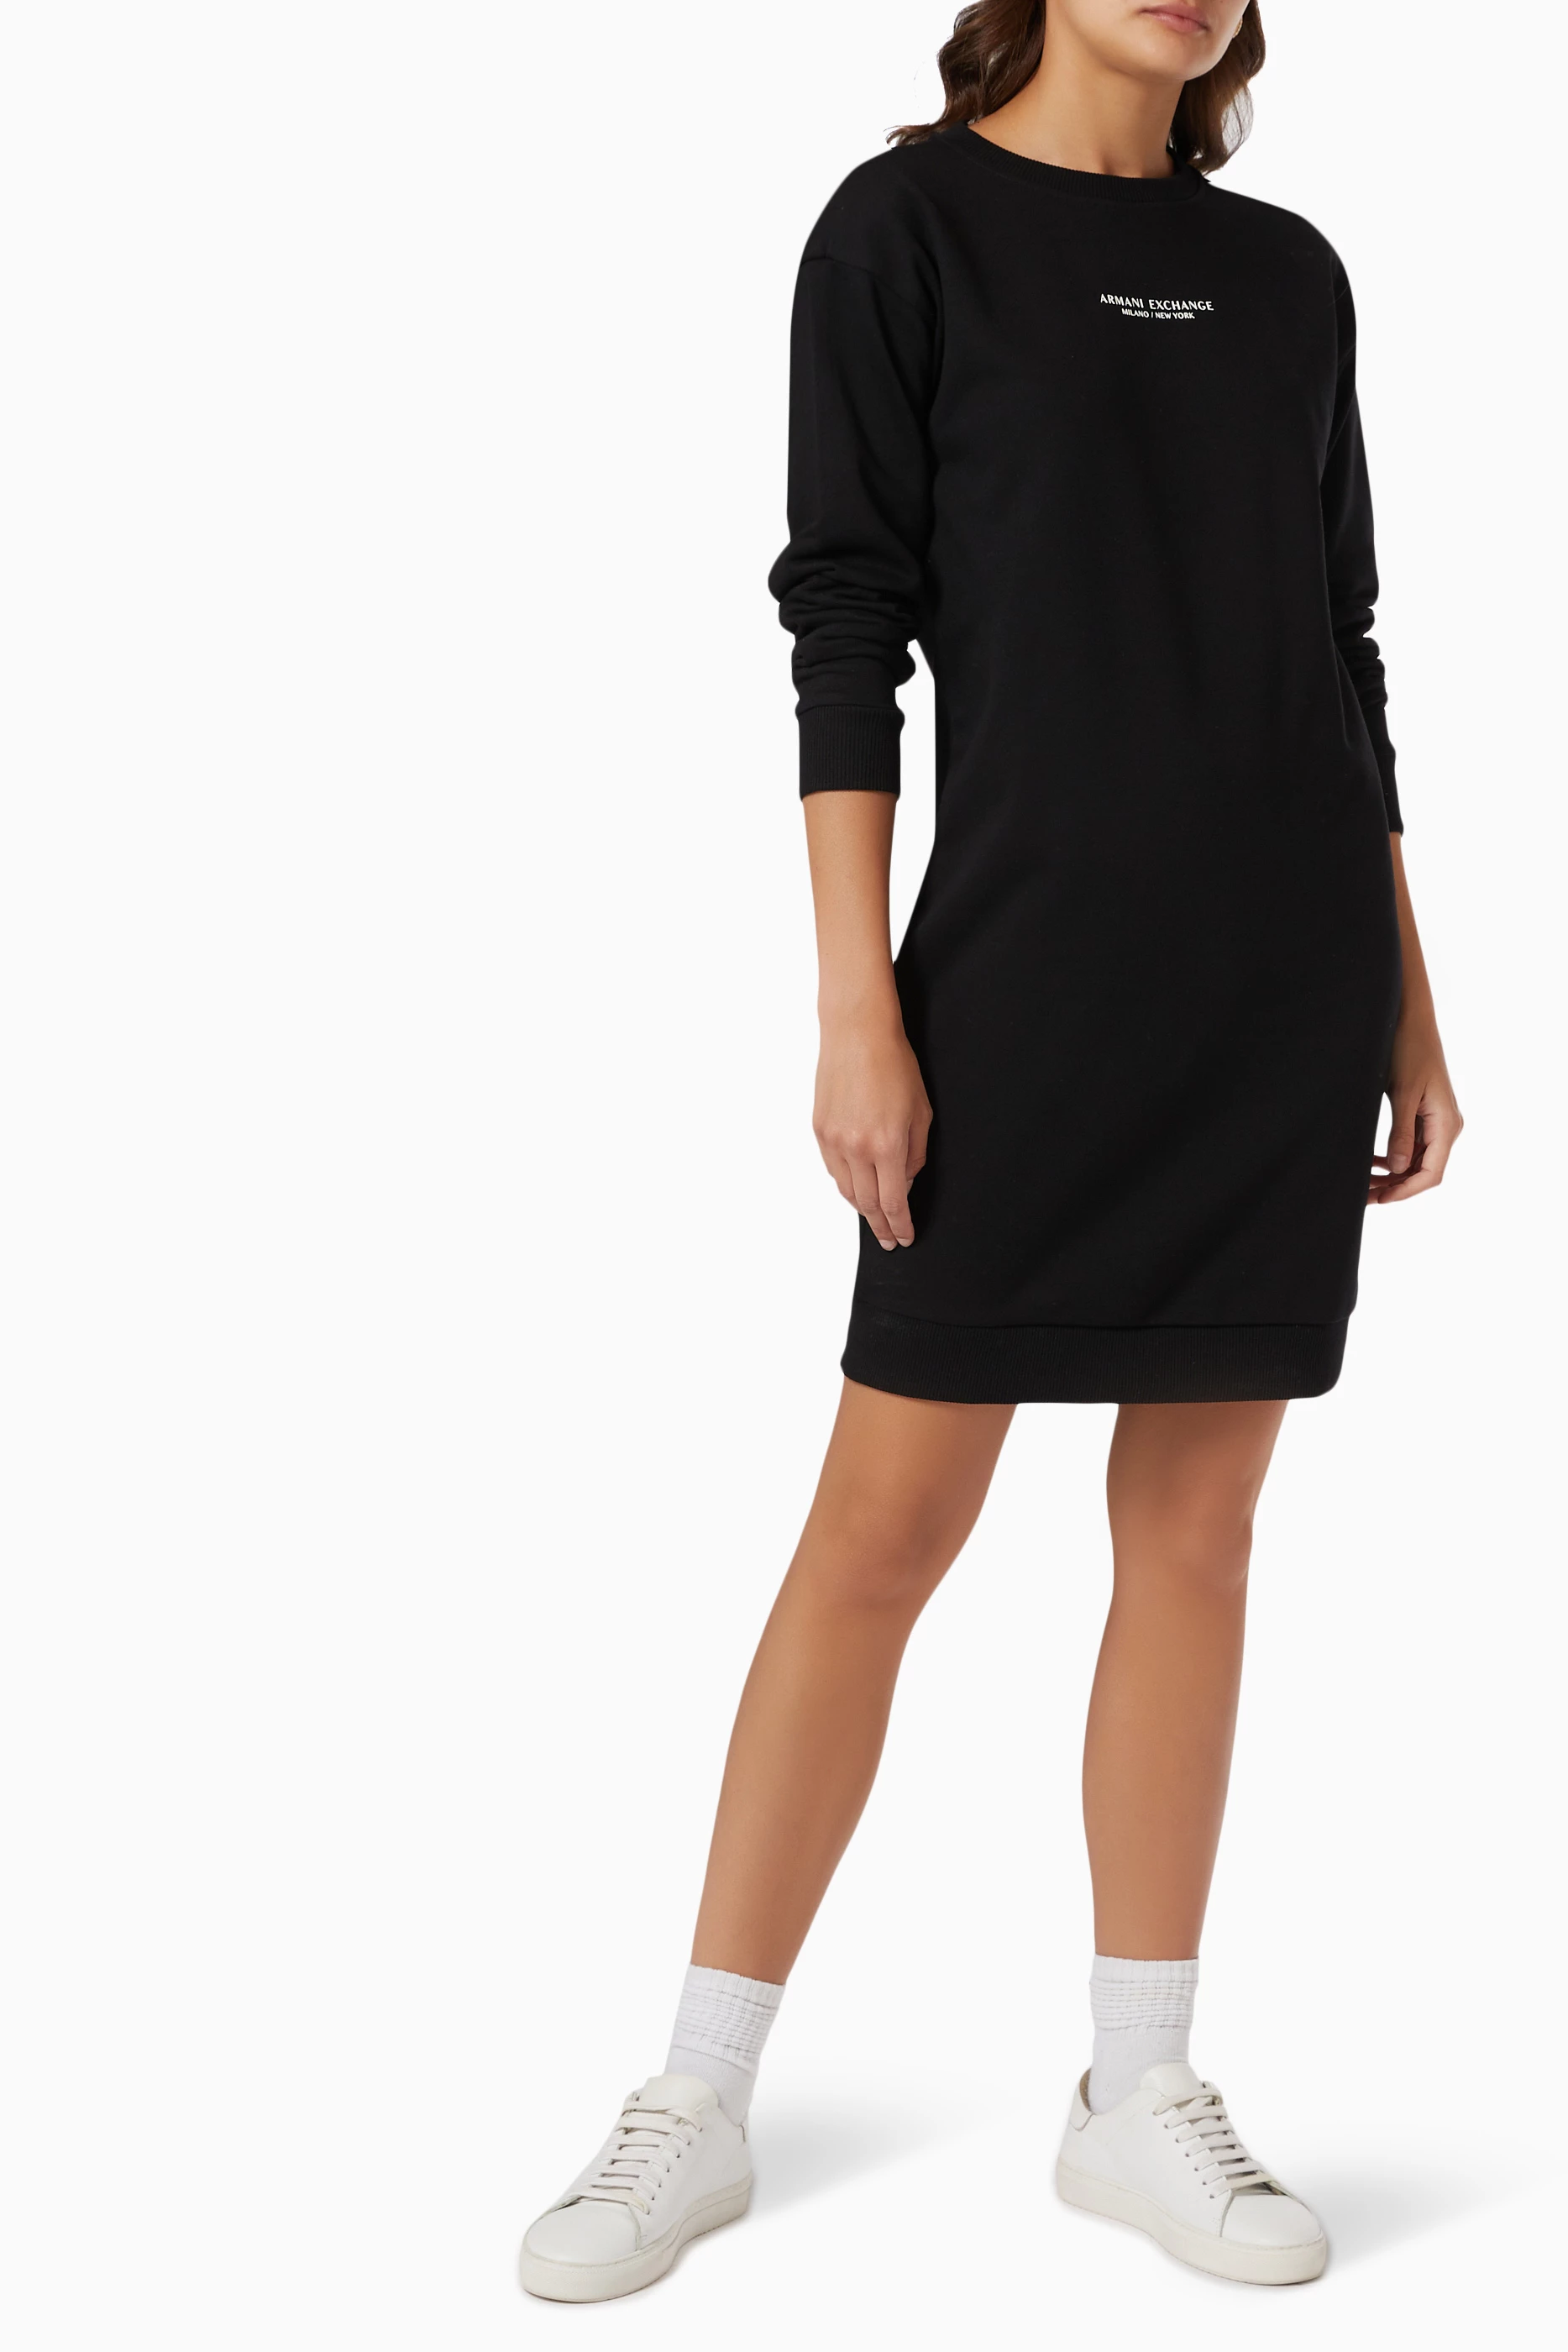 Shop Armani Exchange Black AX Sweatshirt Dress in Jersey for WOMEN | Ounass  Saudi Arabia